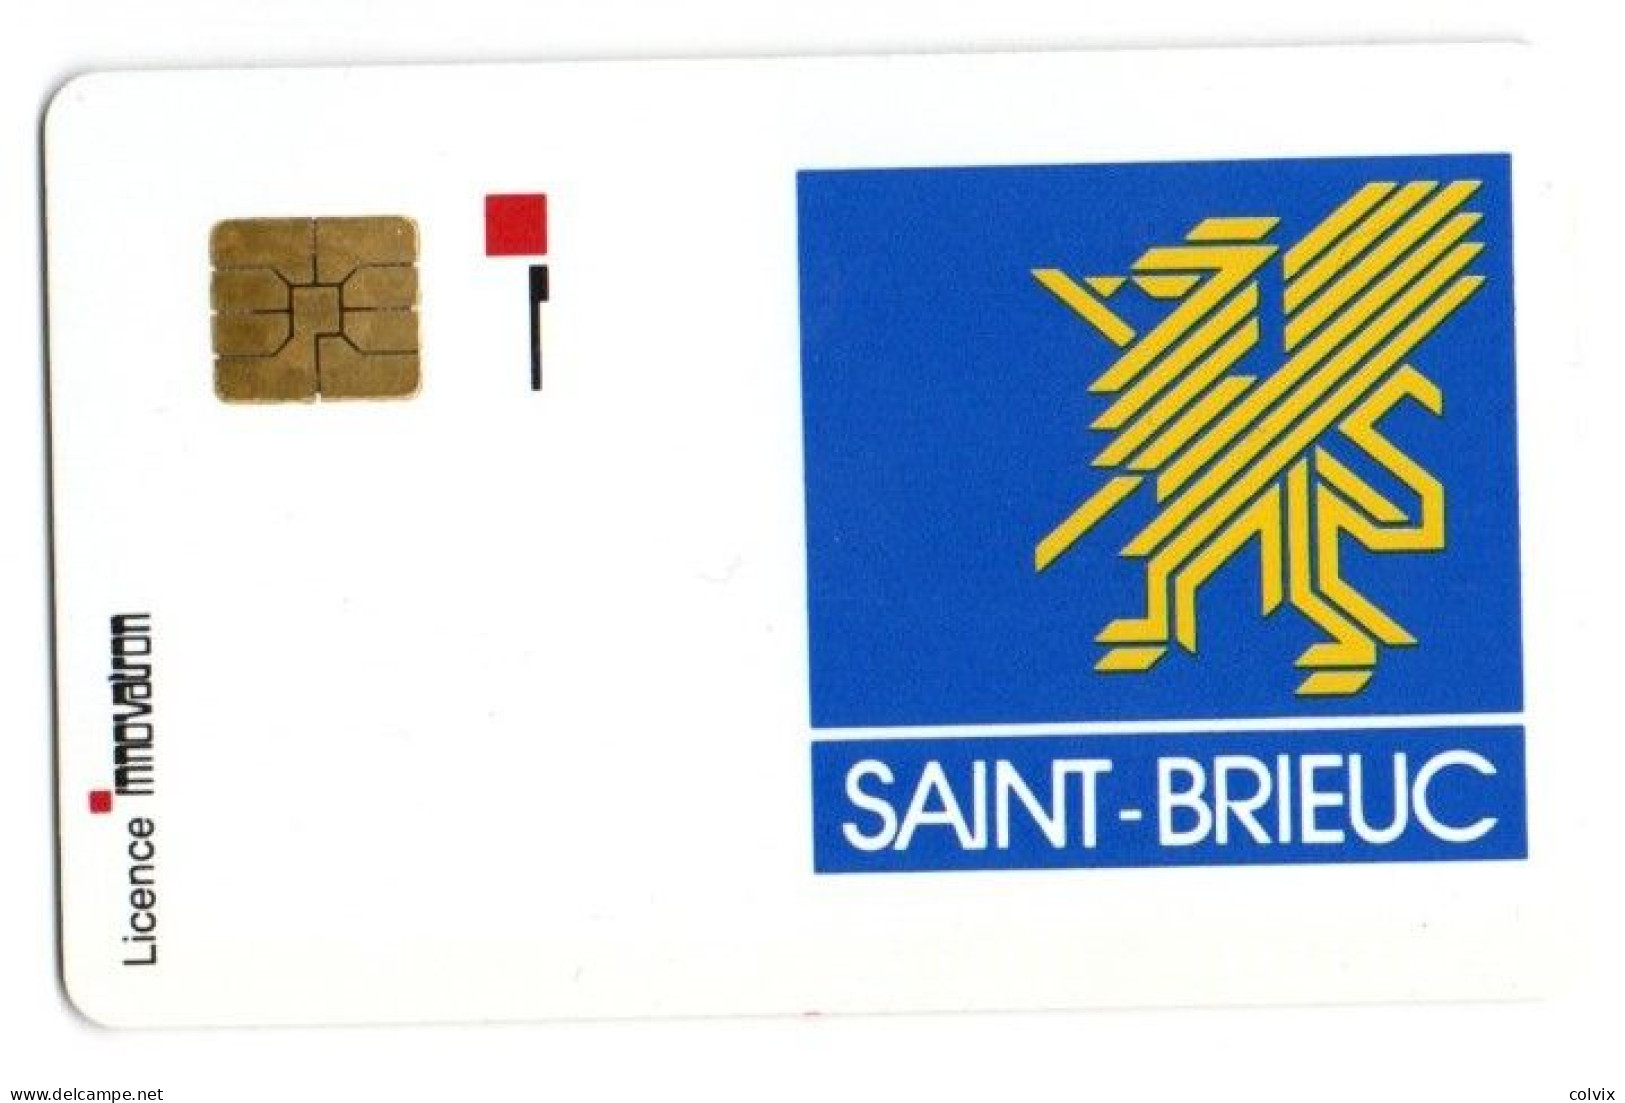 PIAF SAINT BRIEUC -ref PIAF 22000-3 SO3/AFNOR VERSO BLANC RARE Tirage 300ex - Parkkarten